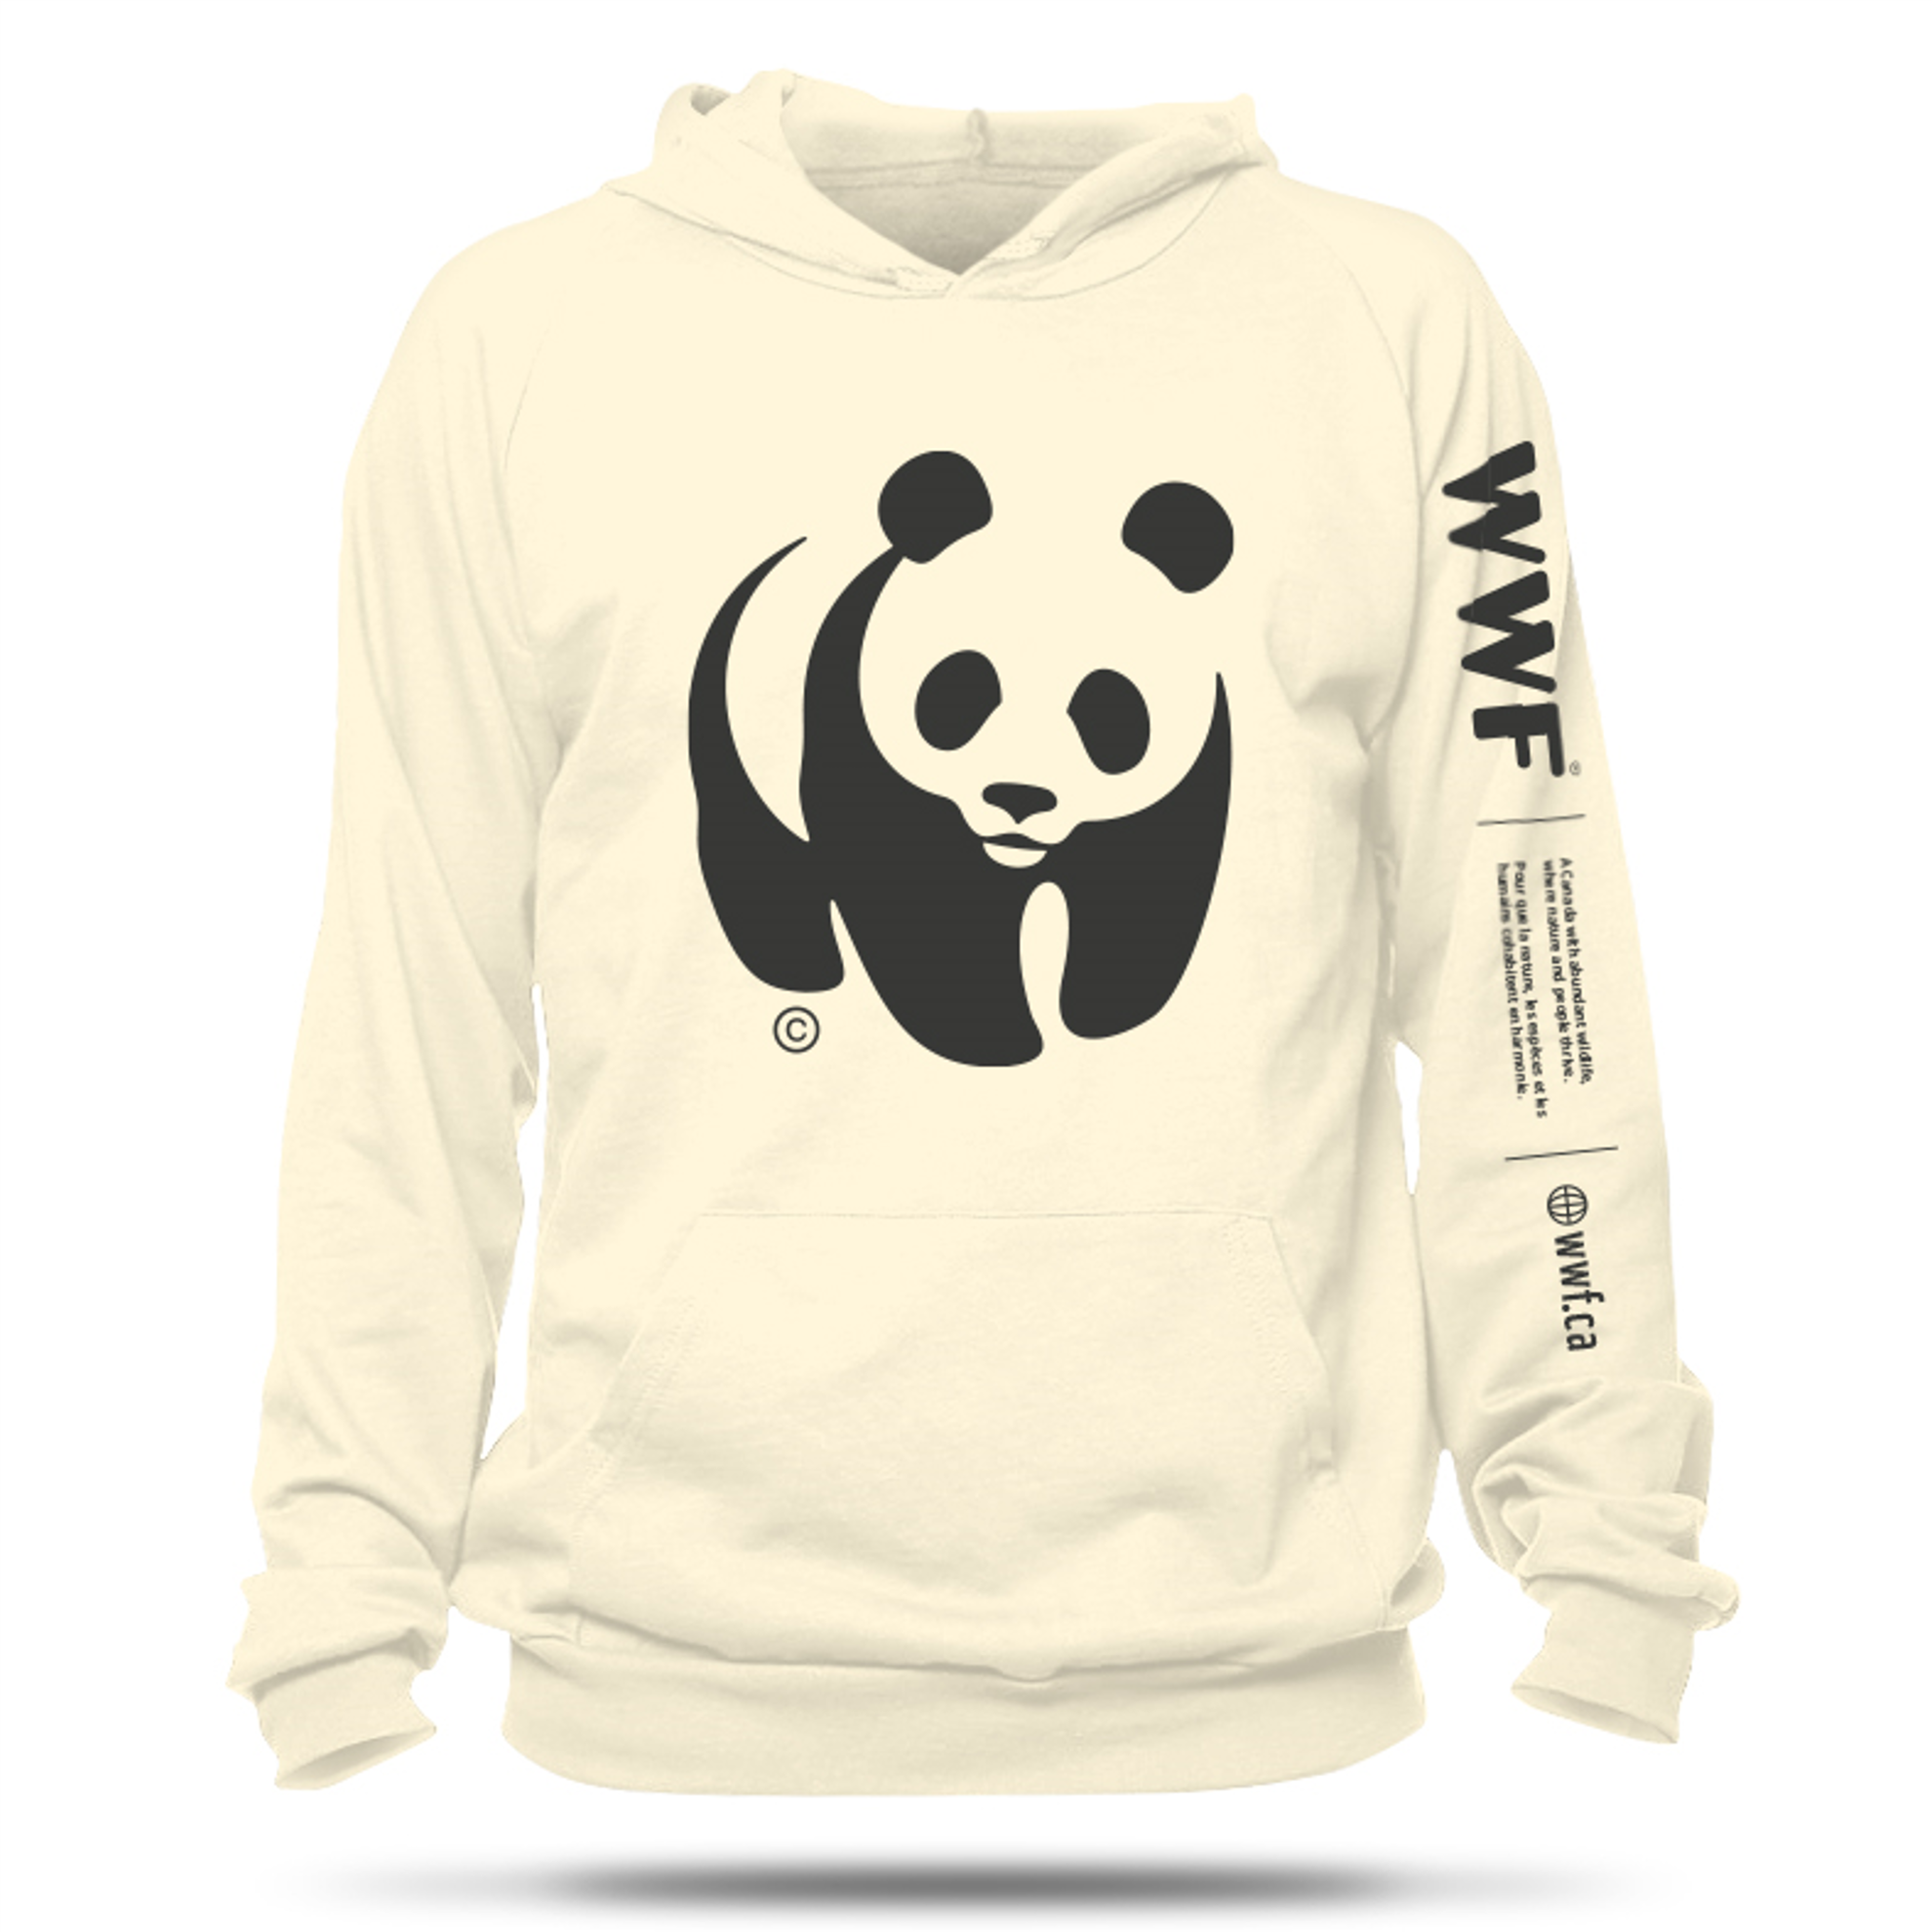 Unisex cream hooded sweatshirt - WWF-Canada